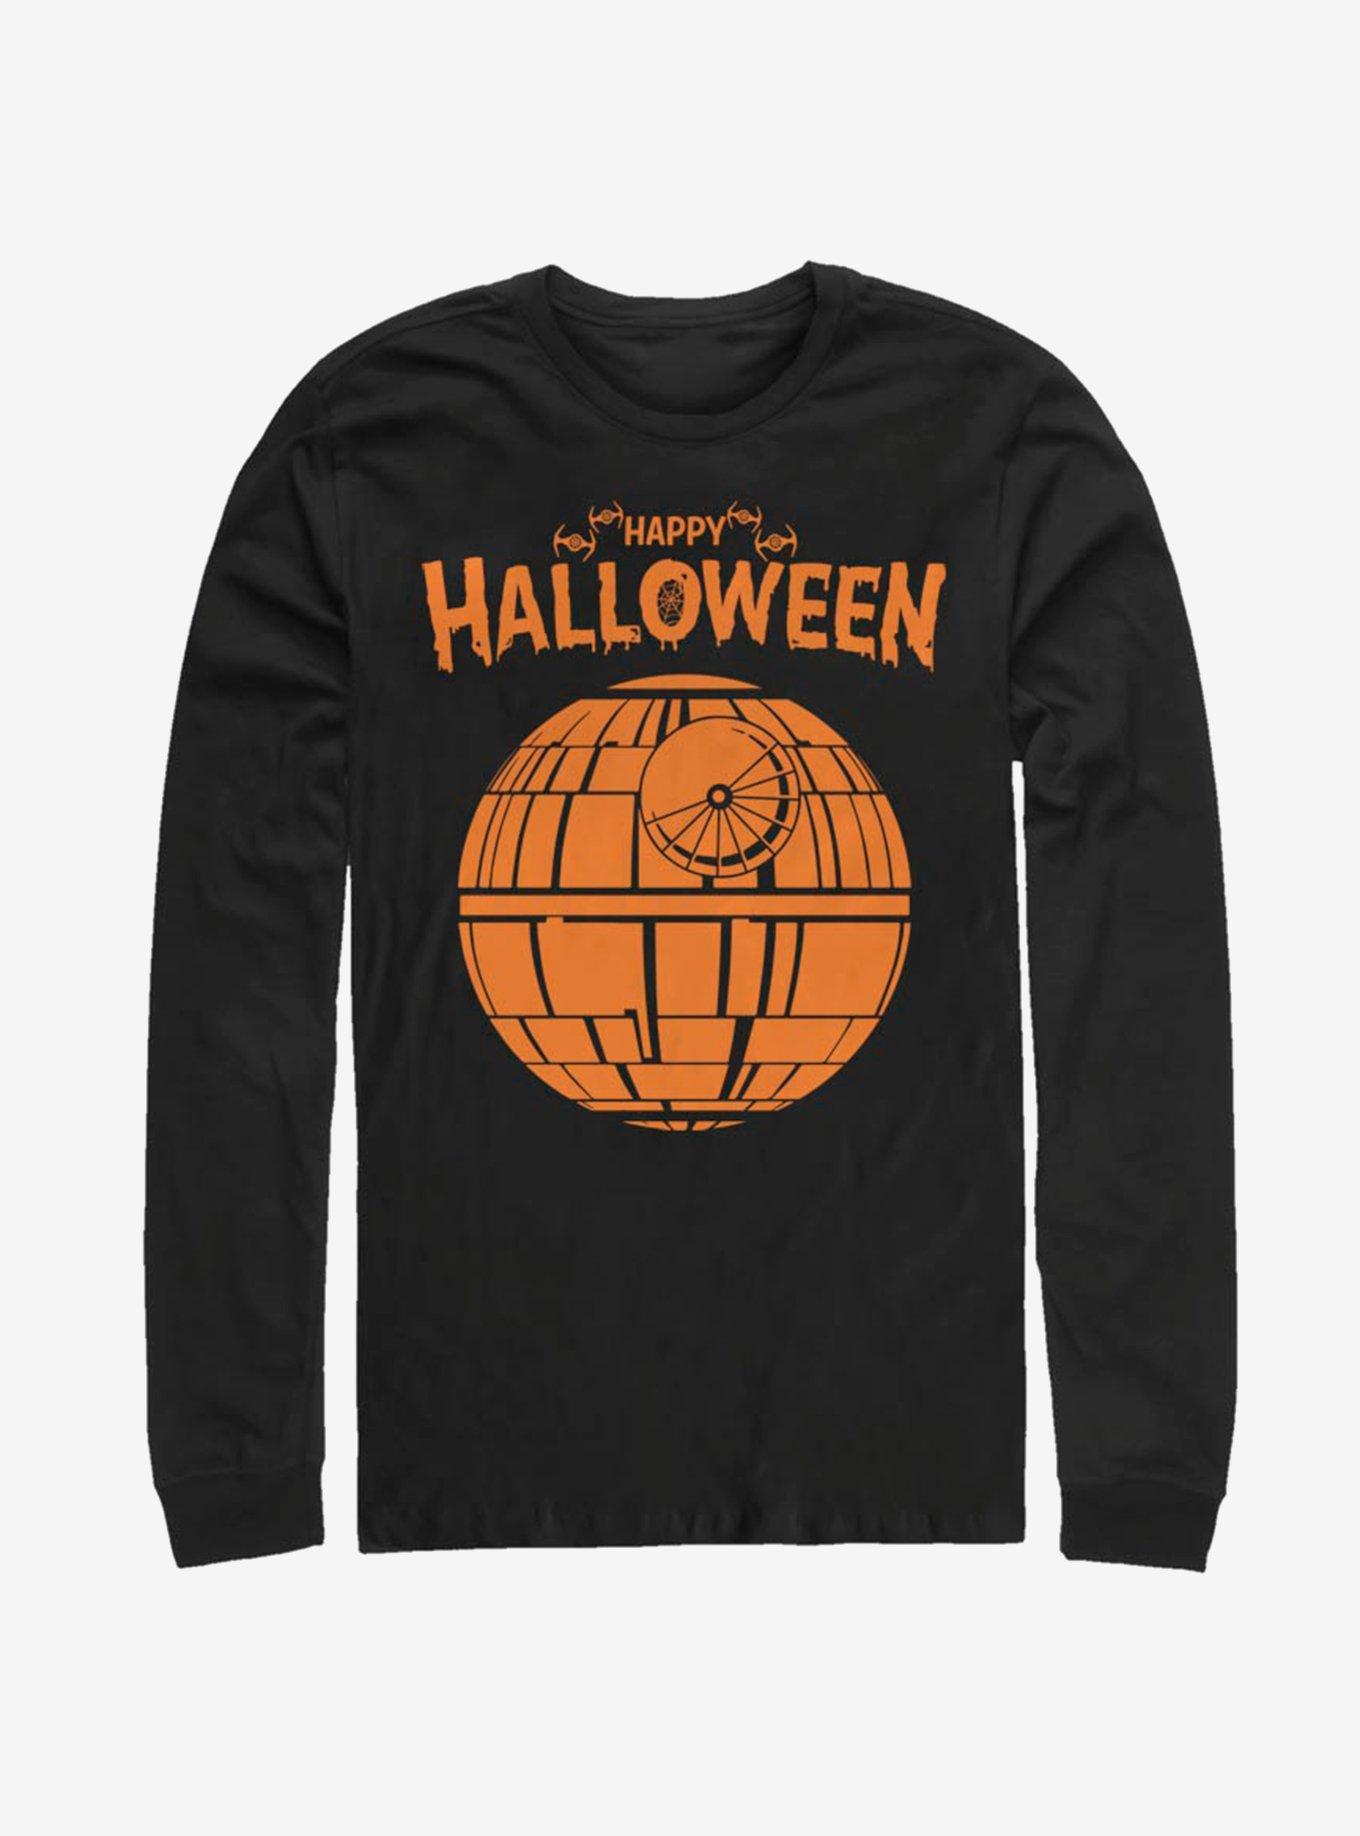 Star Wars Happy Death Star Long-Sleeve T-Shirt, BLACK, hi-res